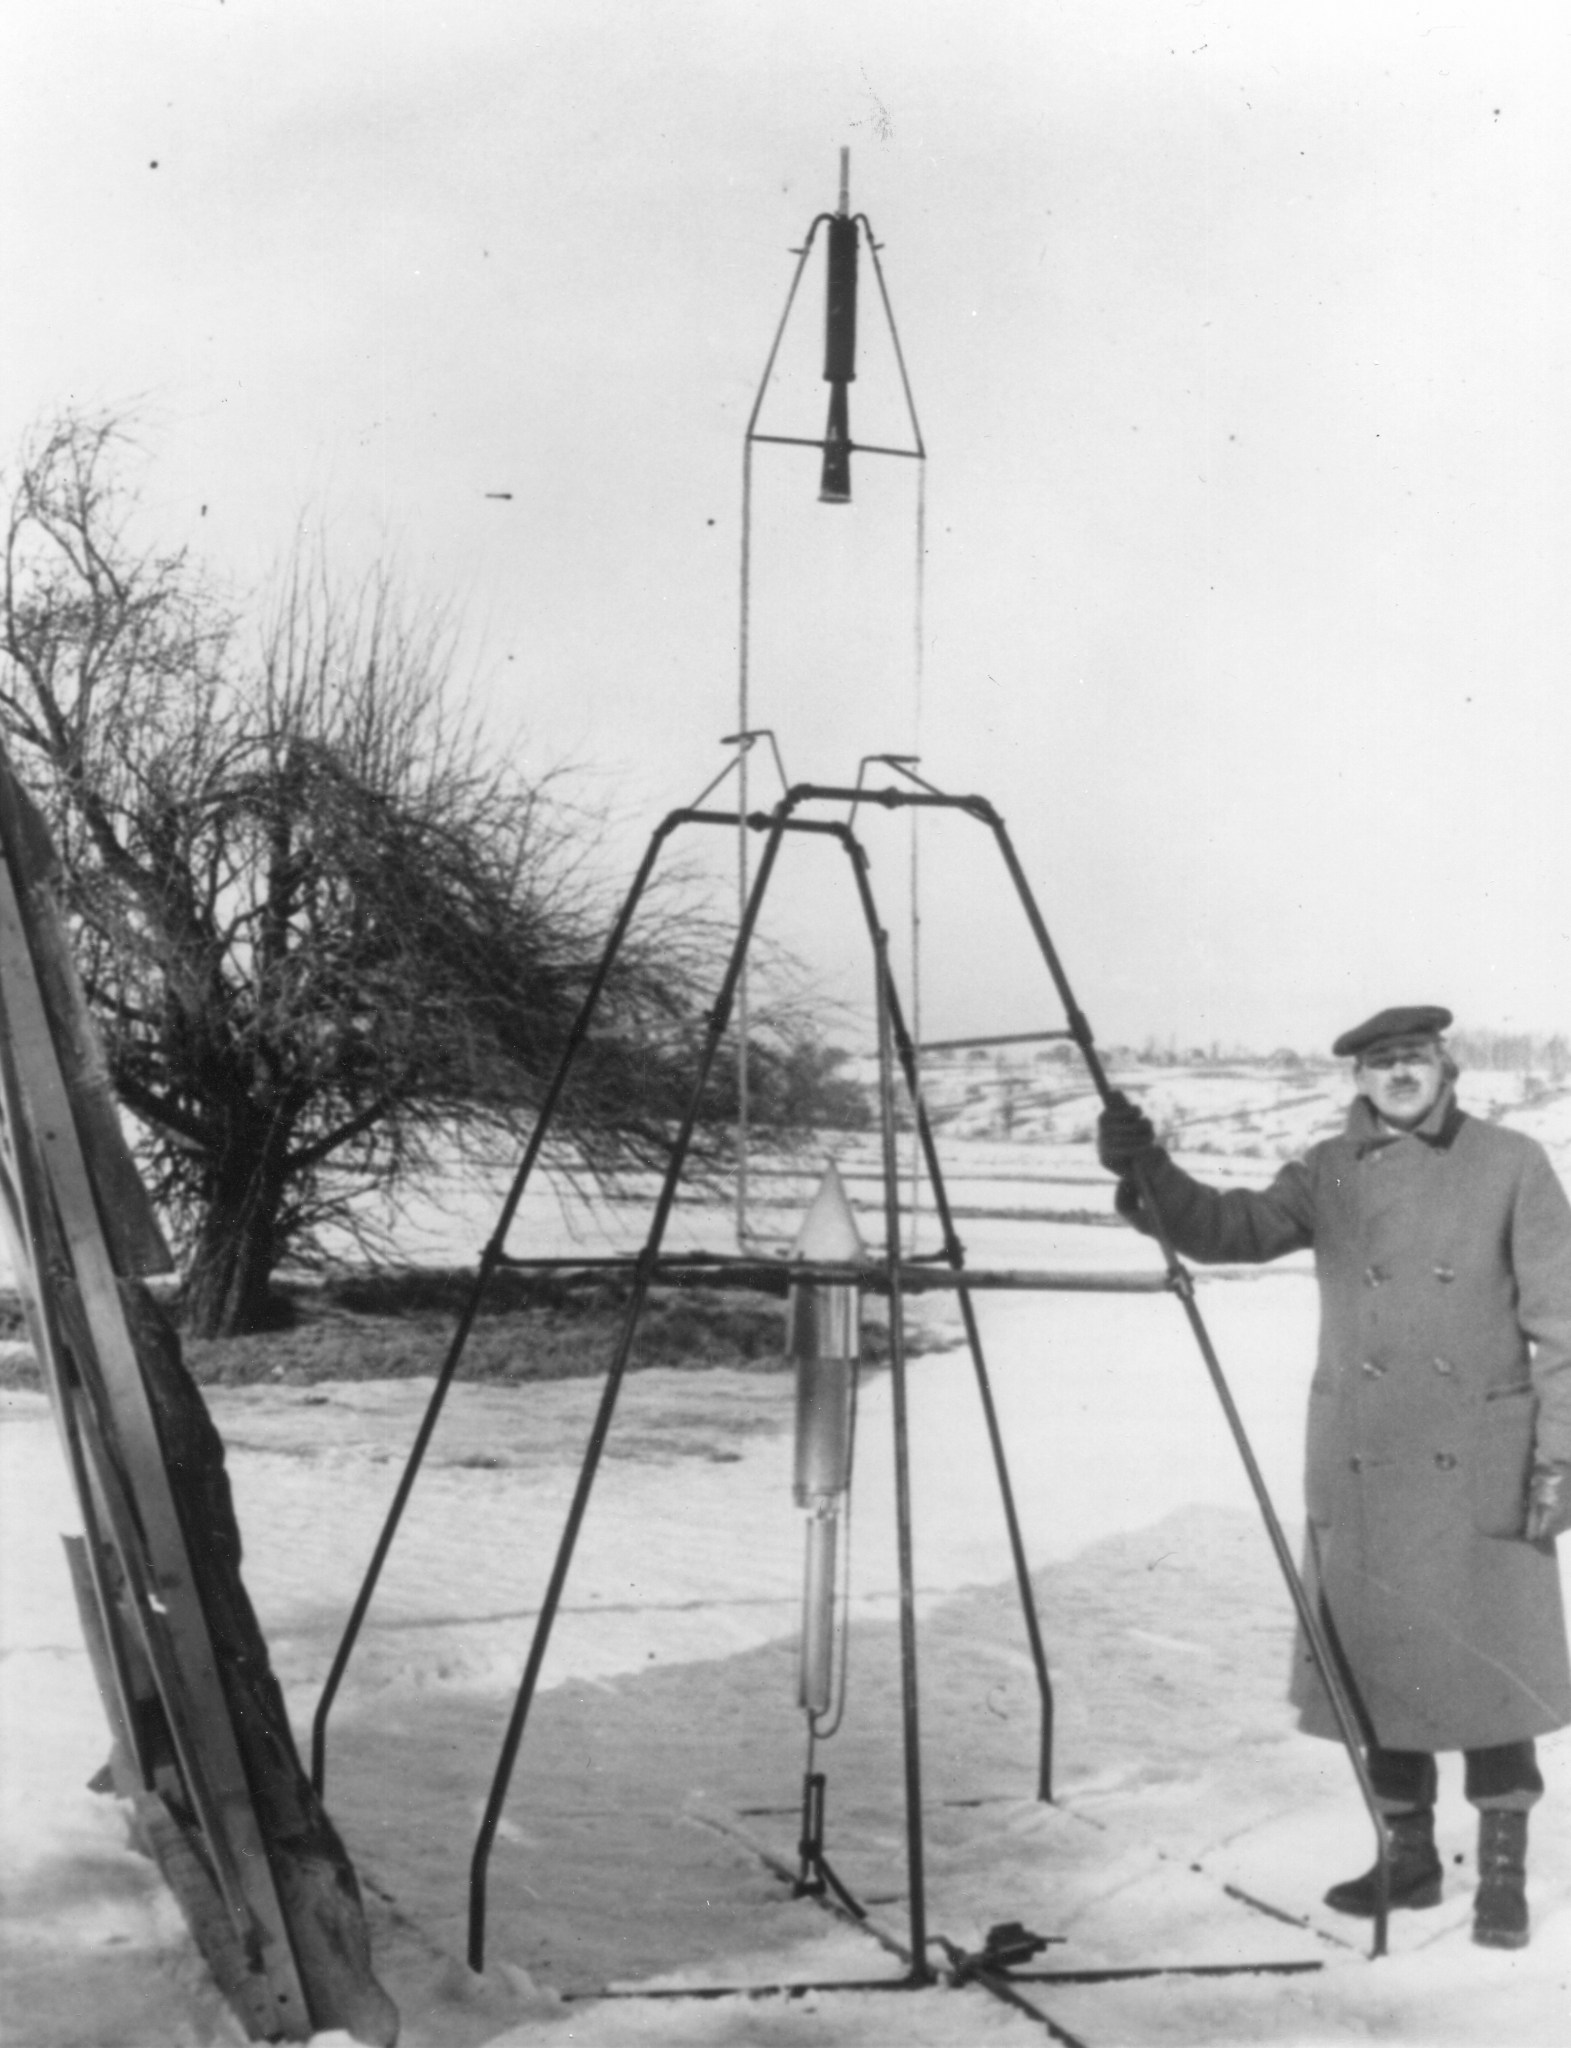 Robert Goddard next to his rocket